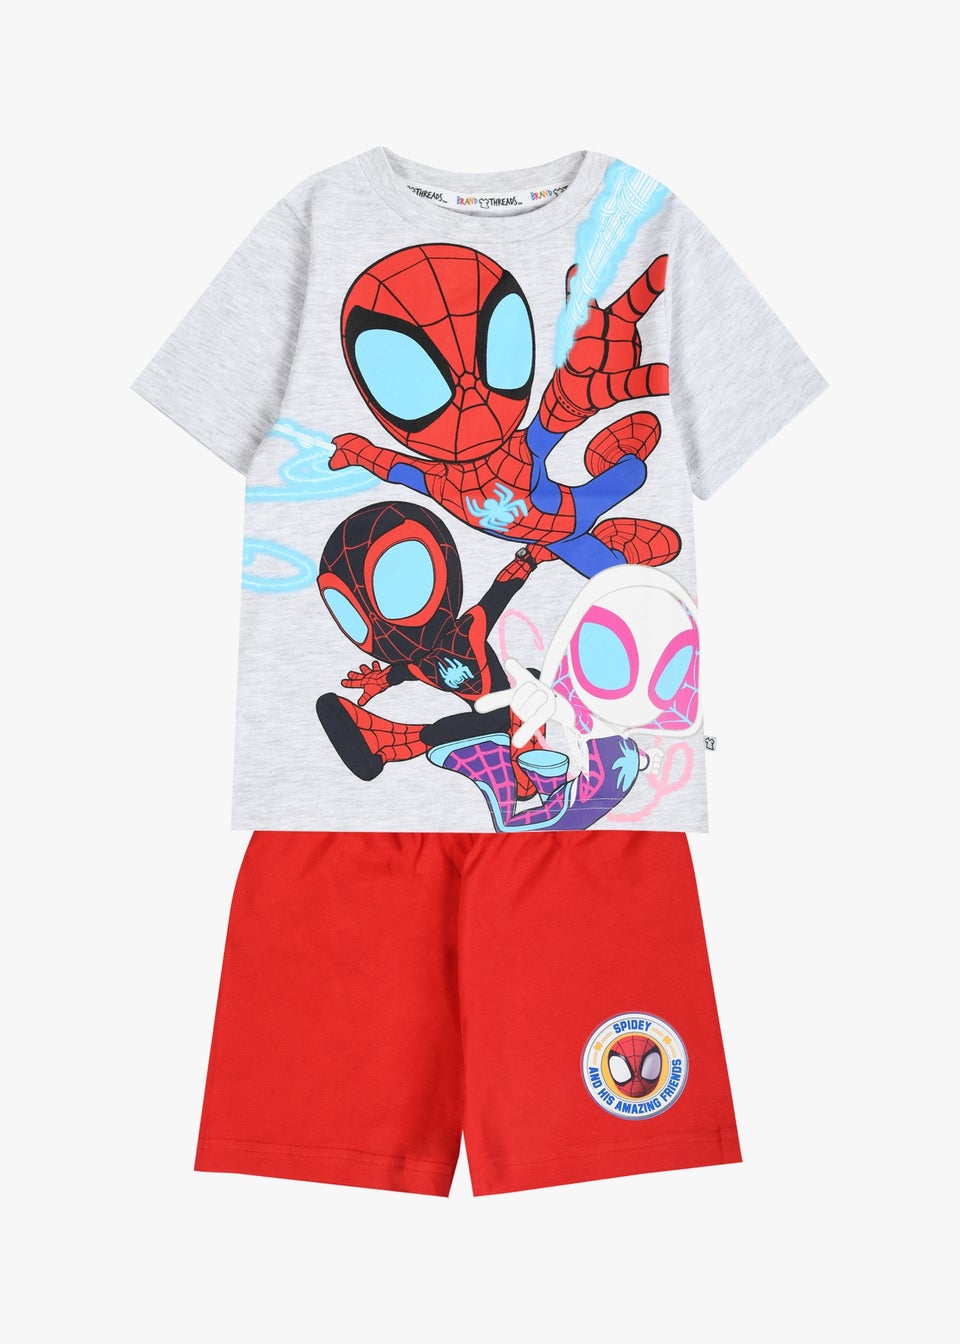 Spiderman and his Amazing Friends Pyjamas